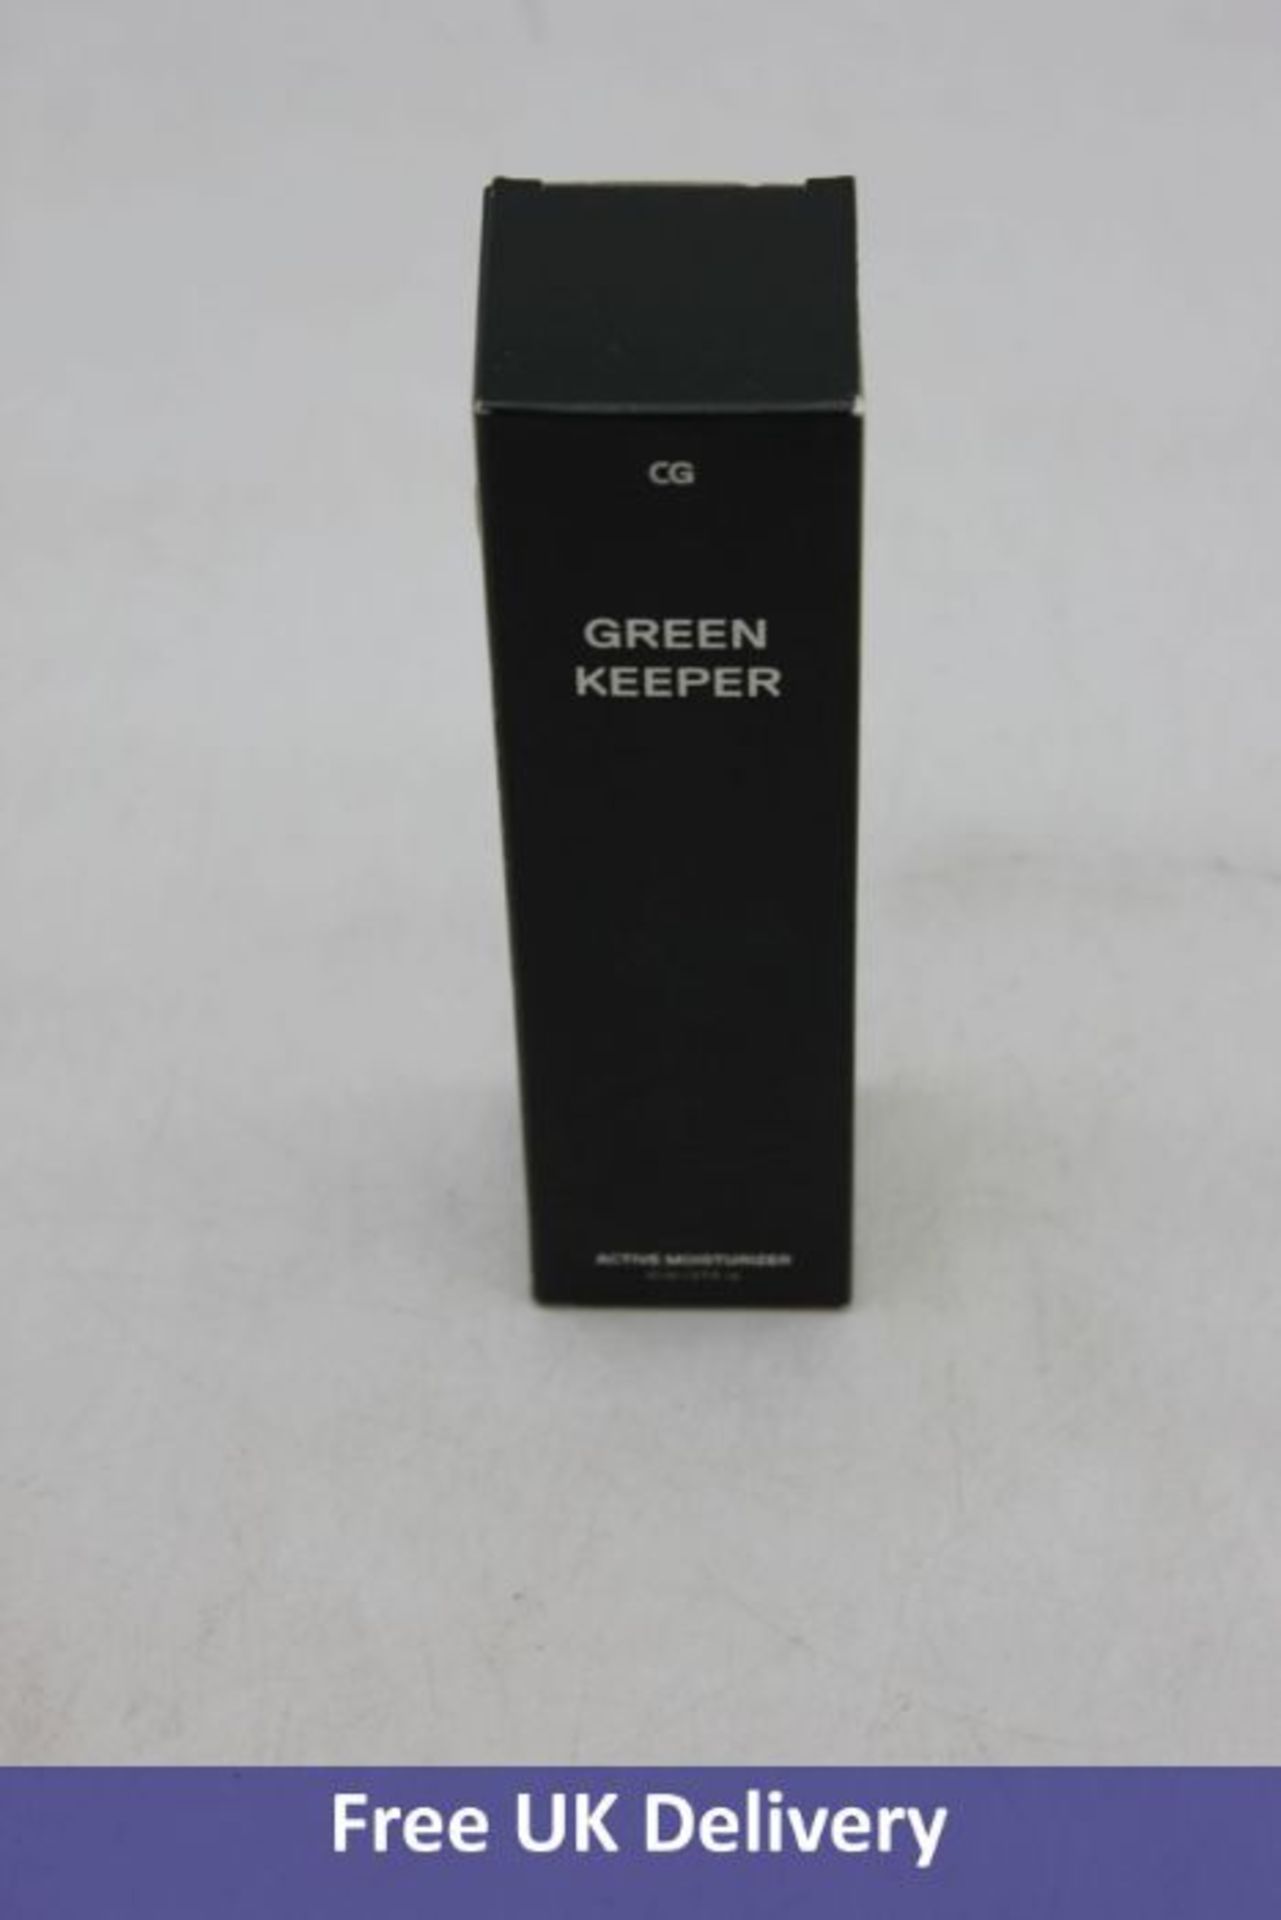 Three items of Copenhagen Grooming 1x Green Keeper, Beard Moisturizer, 80ml, Expiry 04/2023, 1x Groo